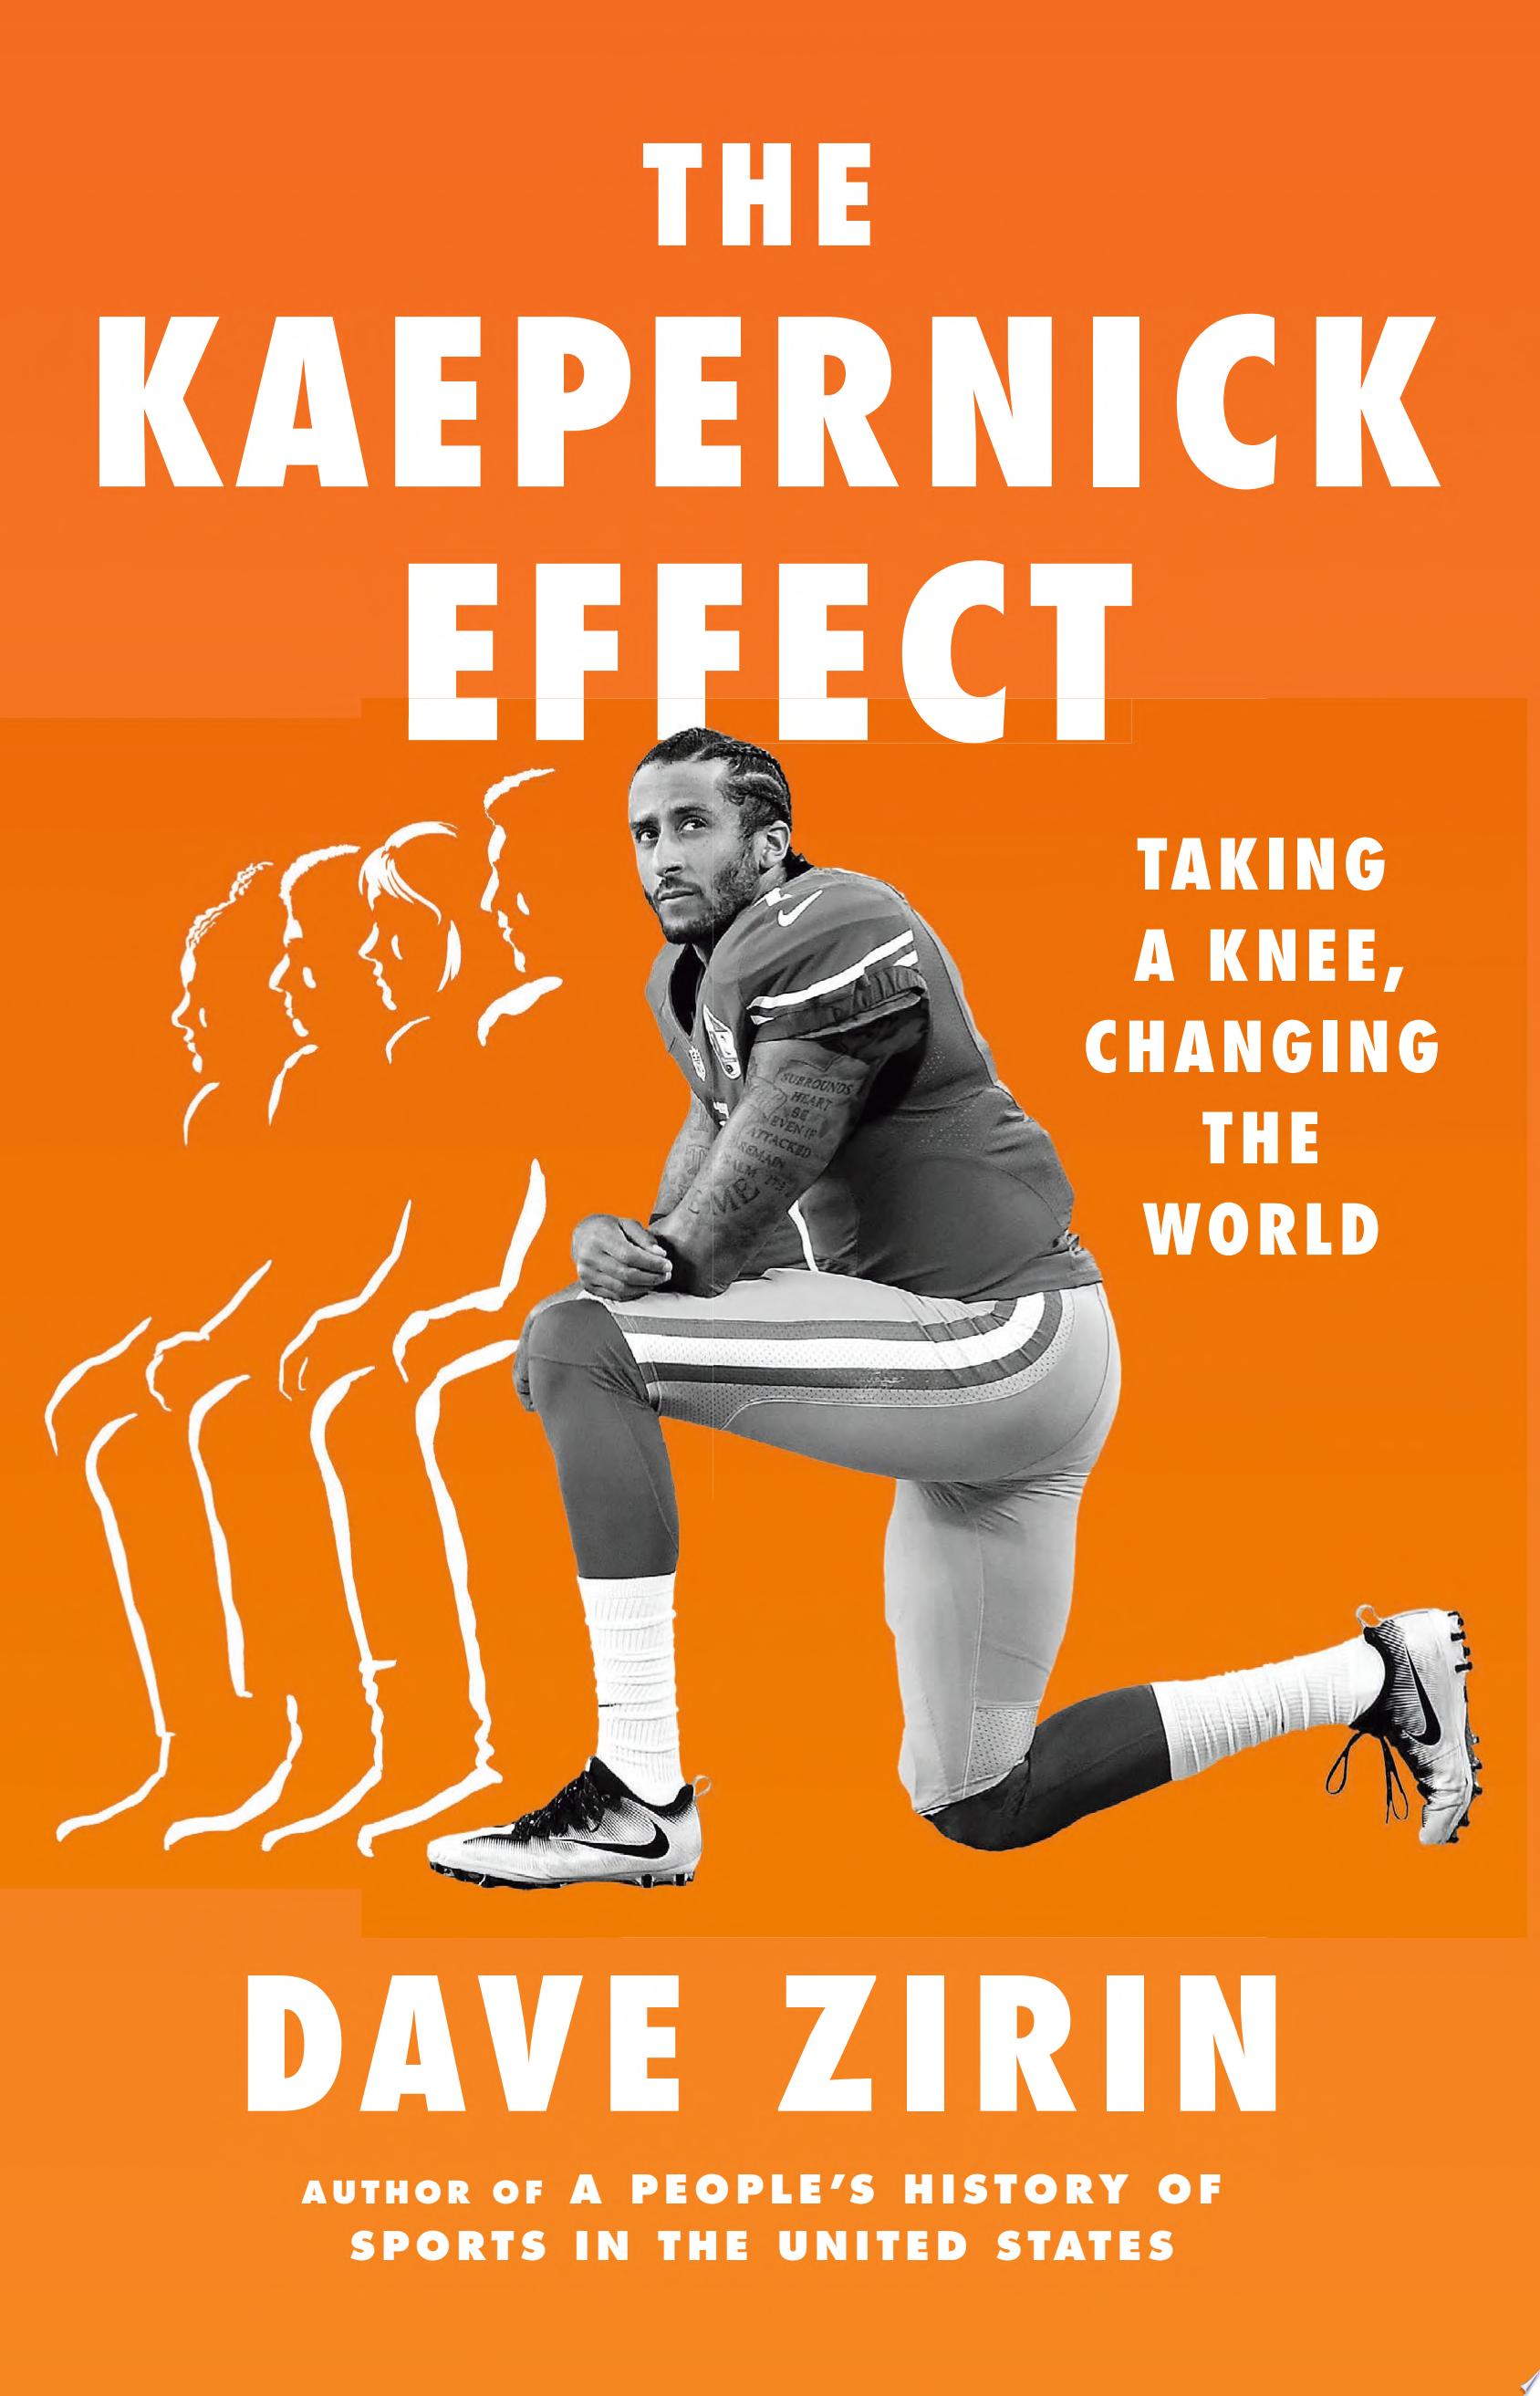 Image for "The Kaepernick Effect"